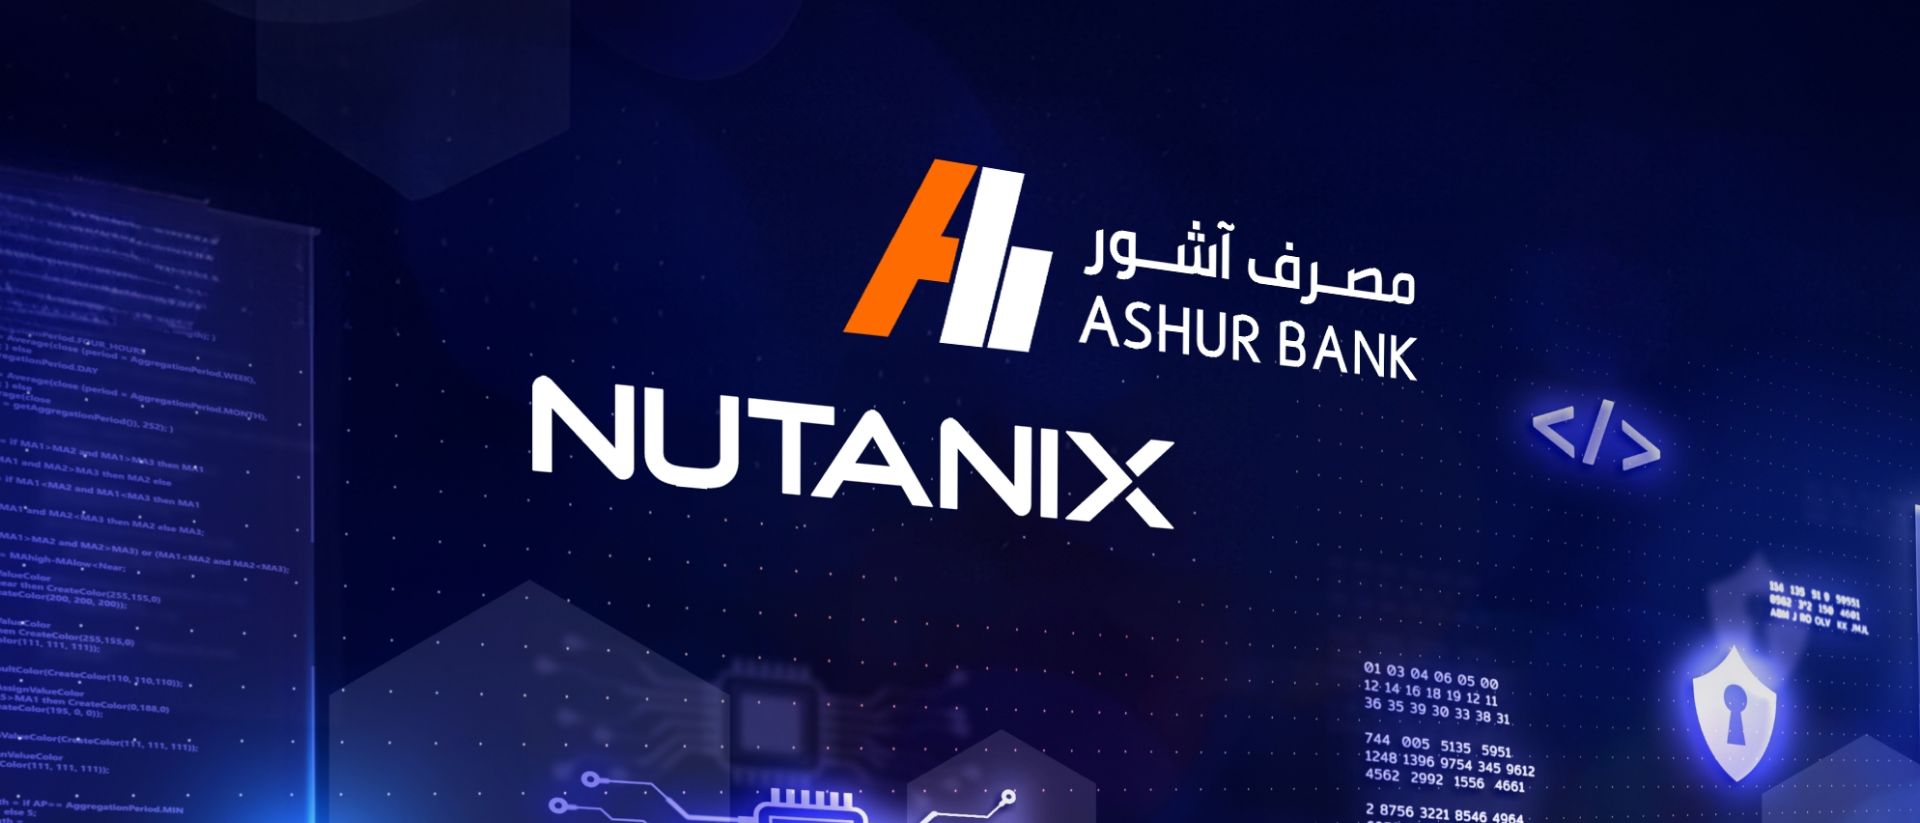 Ashur International Bank Partners with Nutanix to Lead Digital Banking Revolution in Iraq